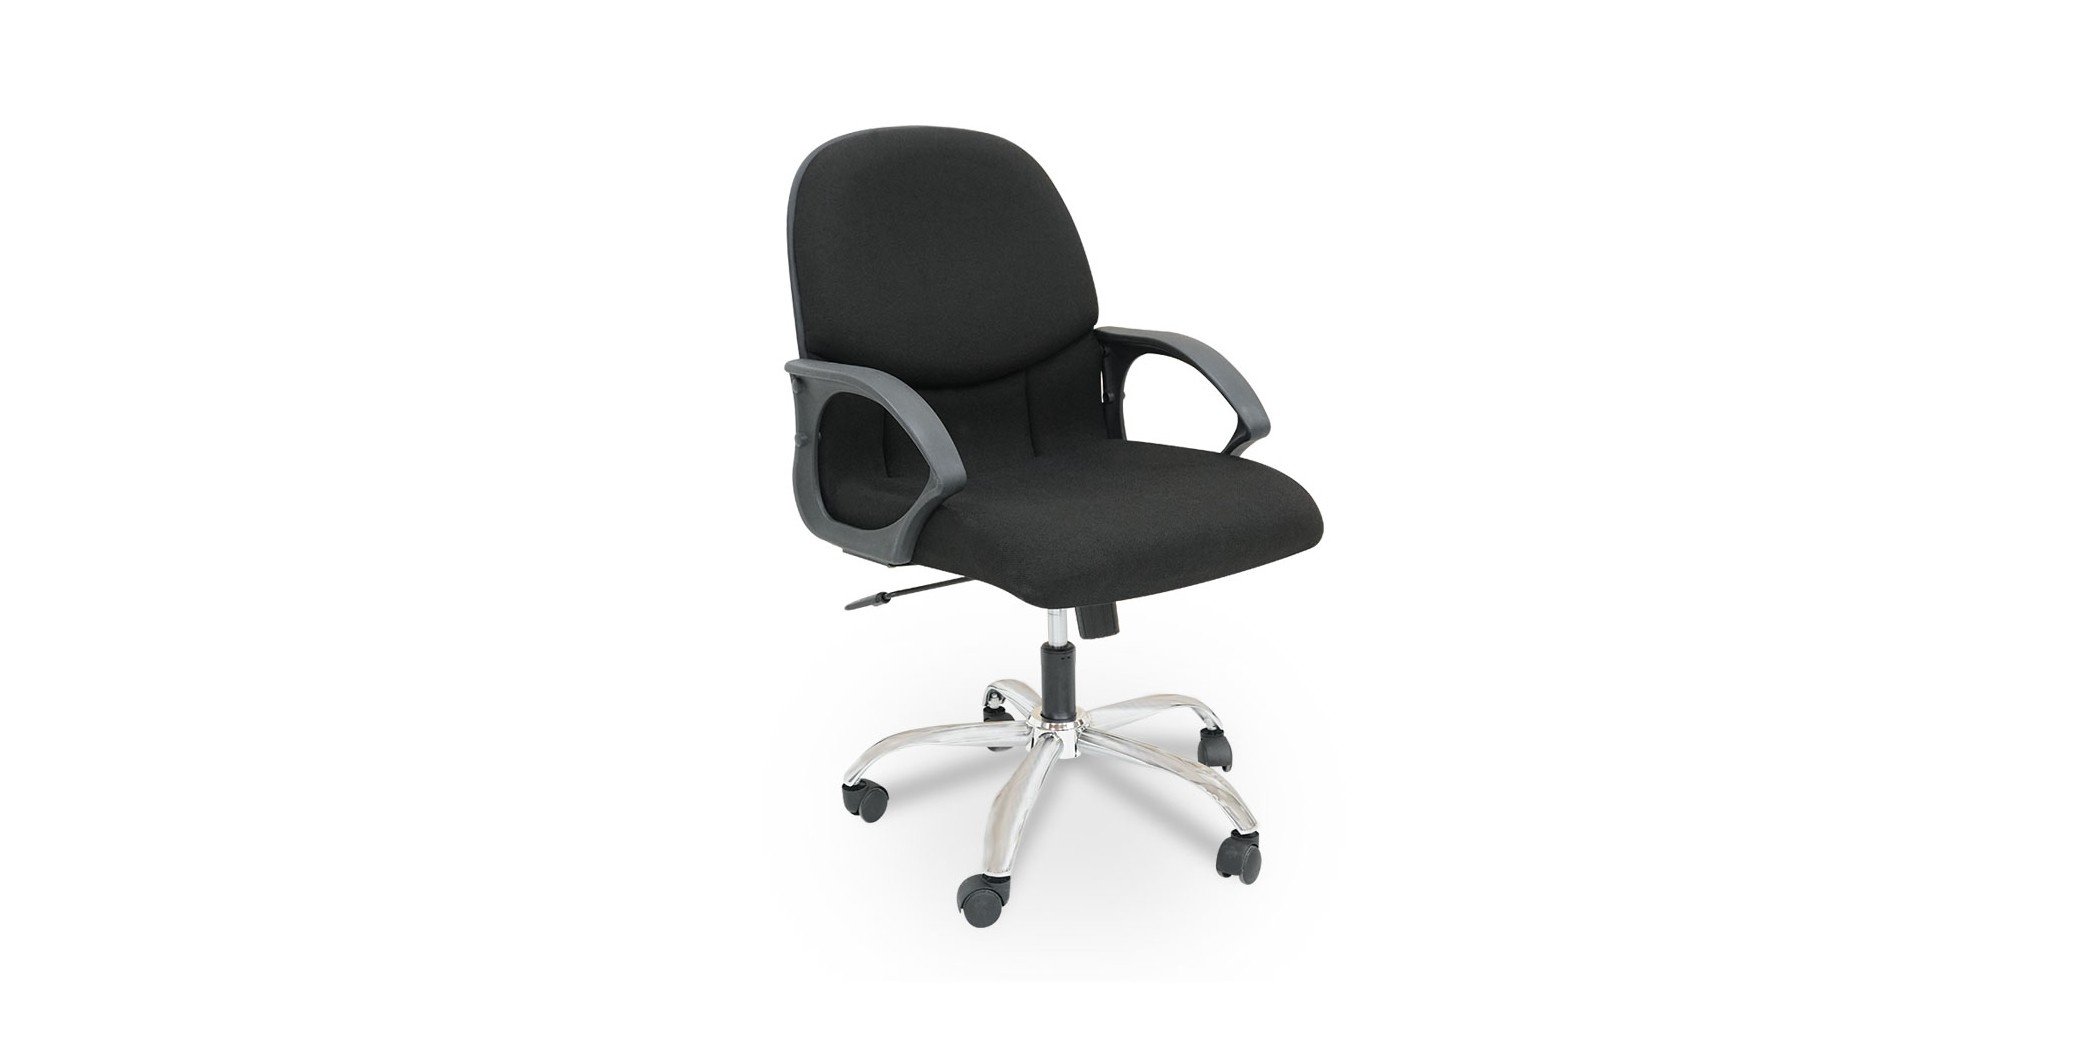 Stema Low Back Chair Black Fabric